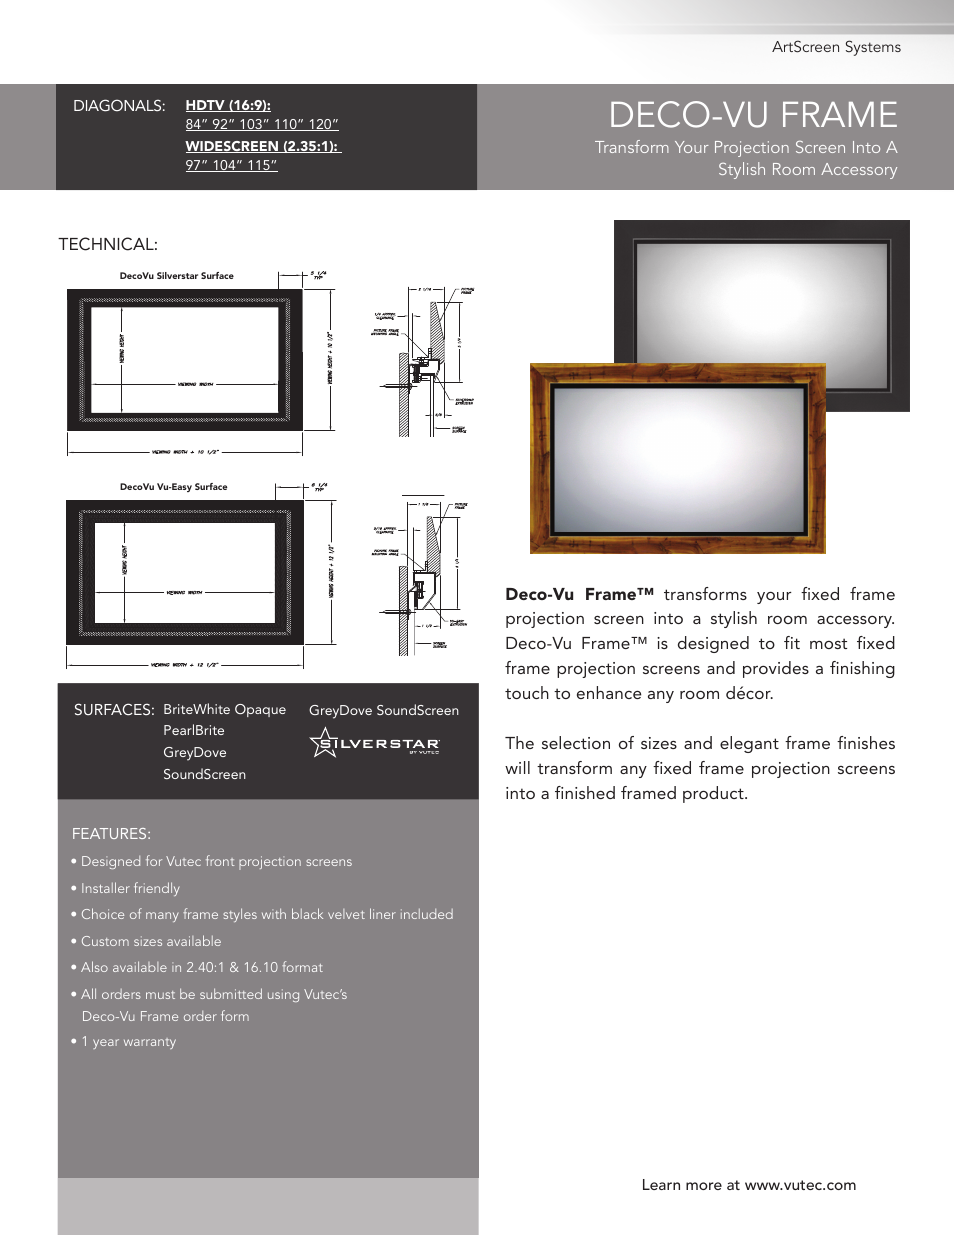 Vutec DECO-VU FRAME - Product Sheet User Manual | 1 page